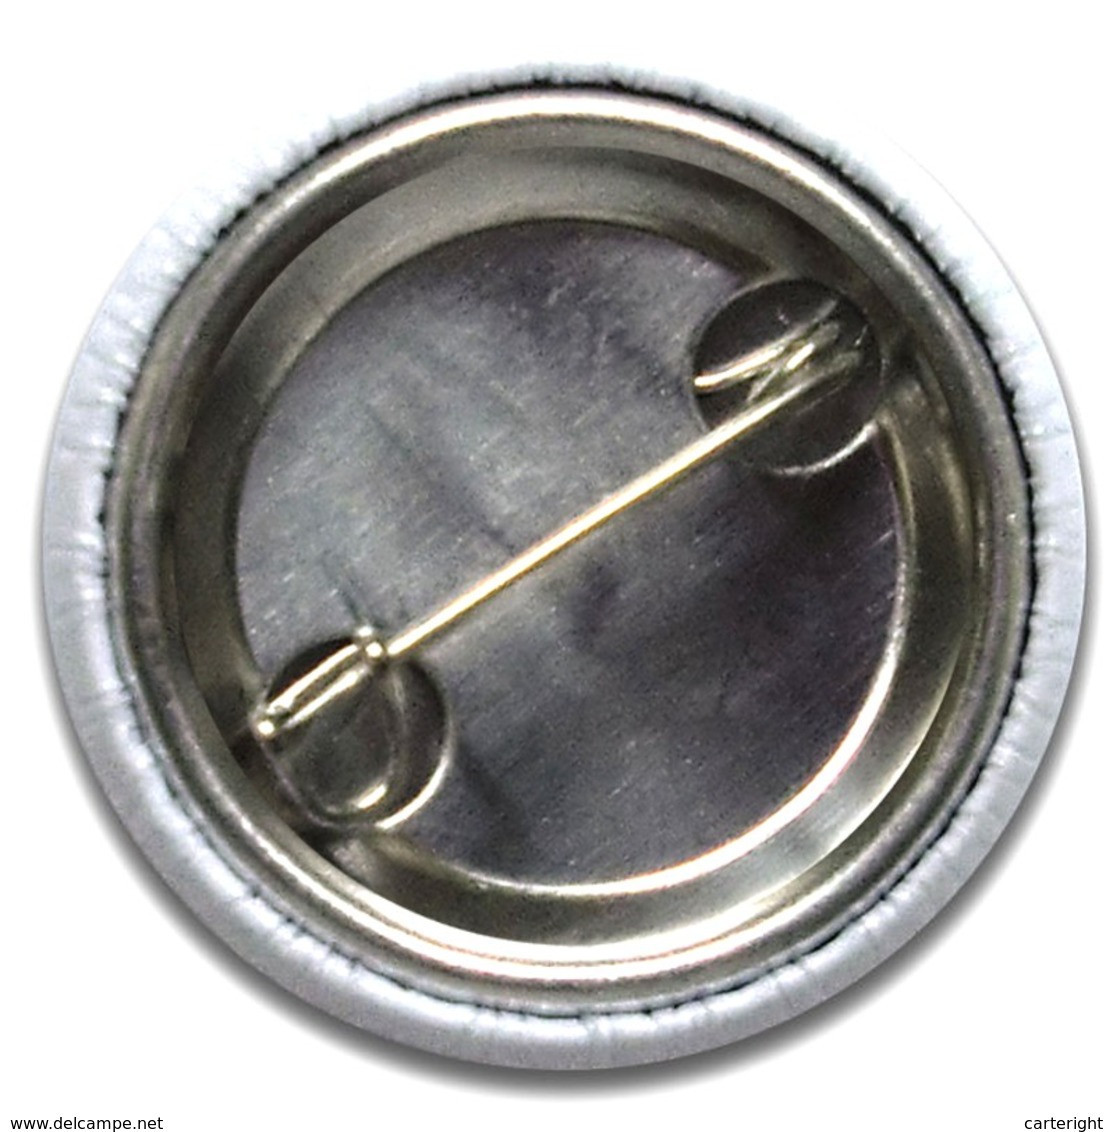 55 X Nofx Band Music Fan ART BADGE BUTTON PIN SET 1 (1inch/25mm Diameter) - Music